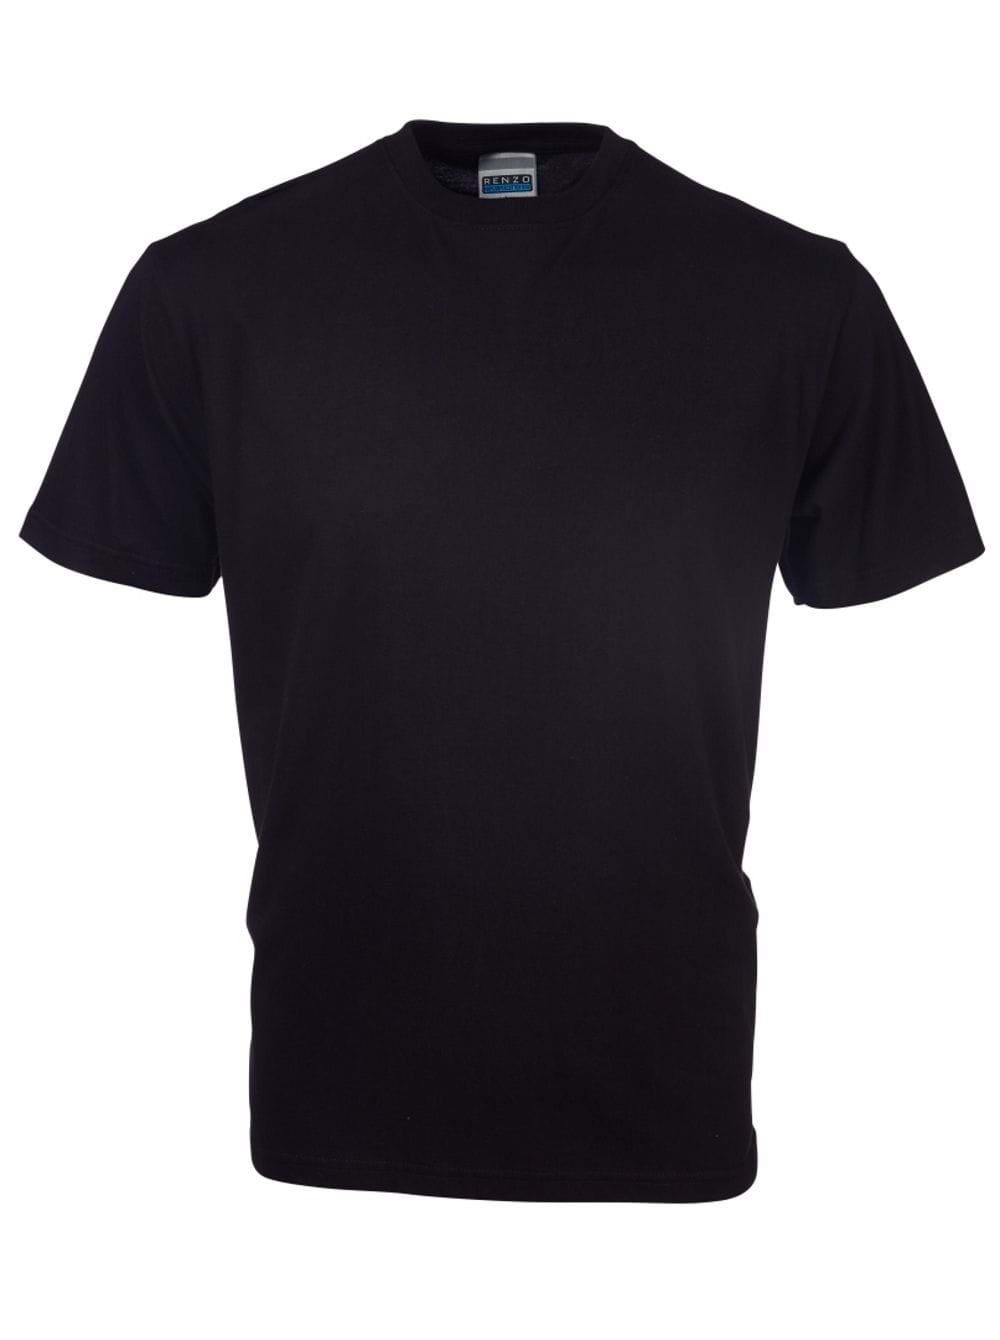 165G Crew Neck T-Shirt - Black